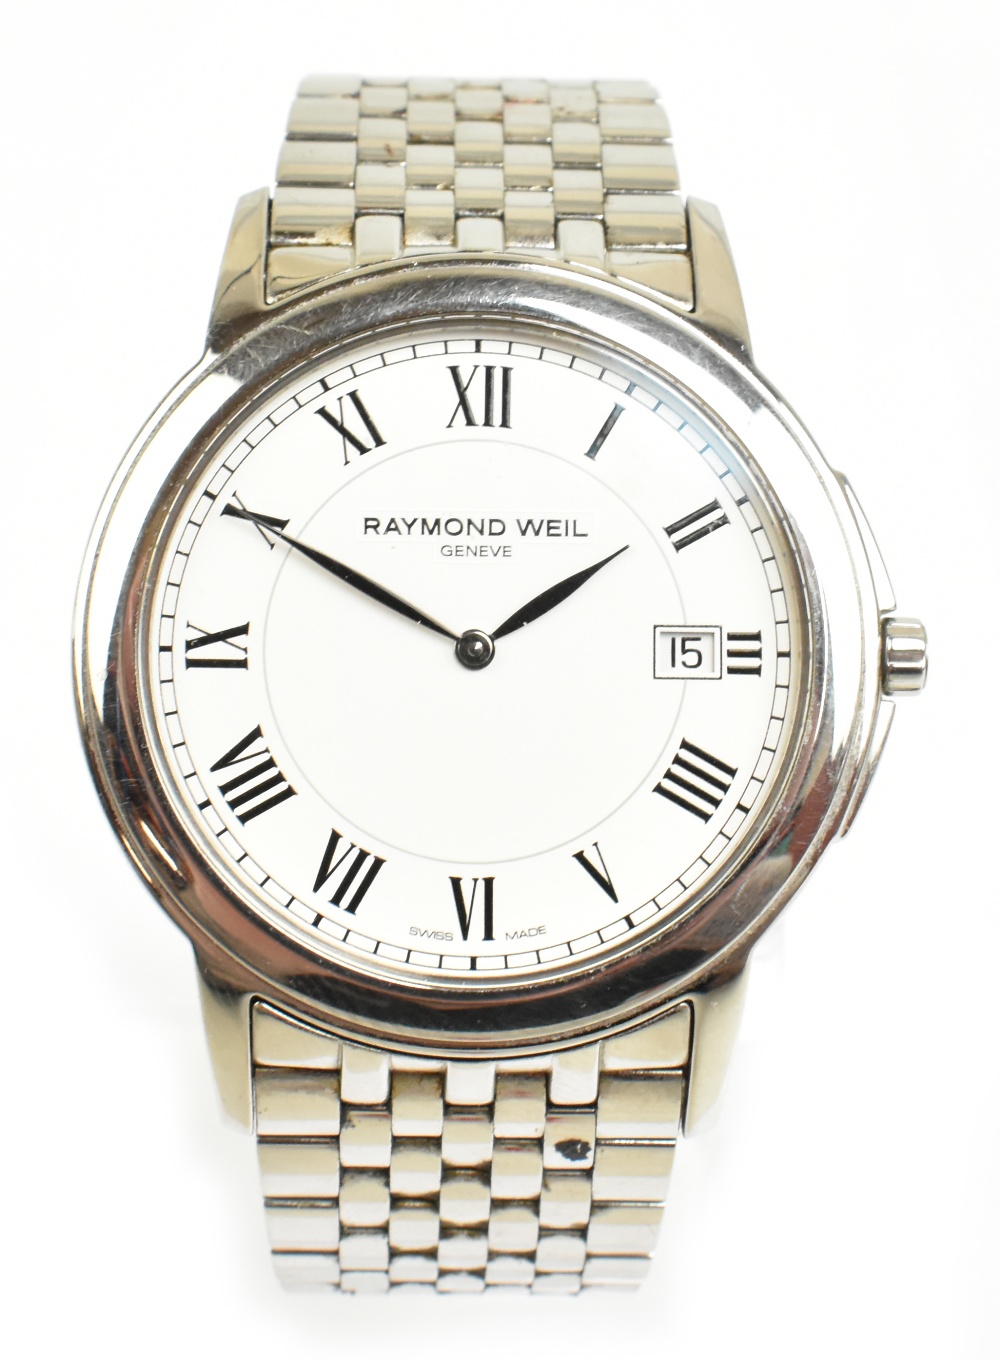 RAYMOND WEIL; a gentleman's stainless steel quartz wristwatch, the circular dial set with Roman